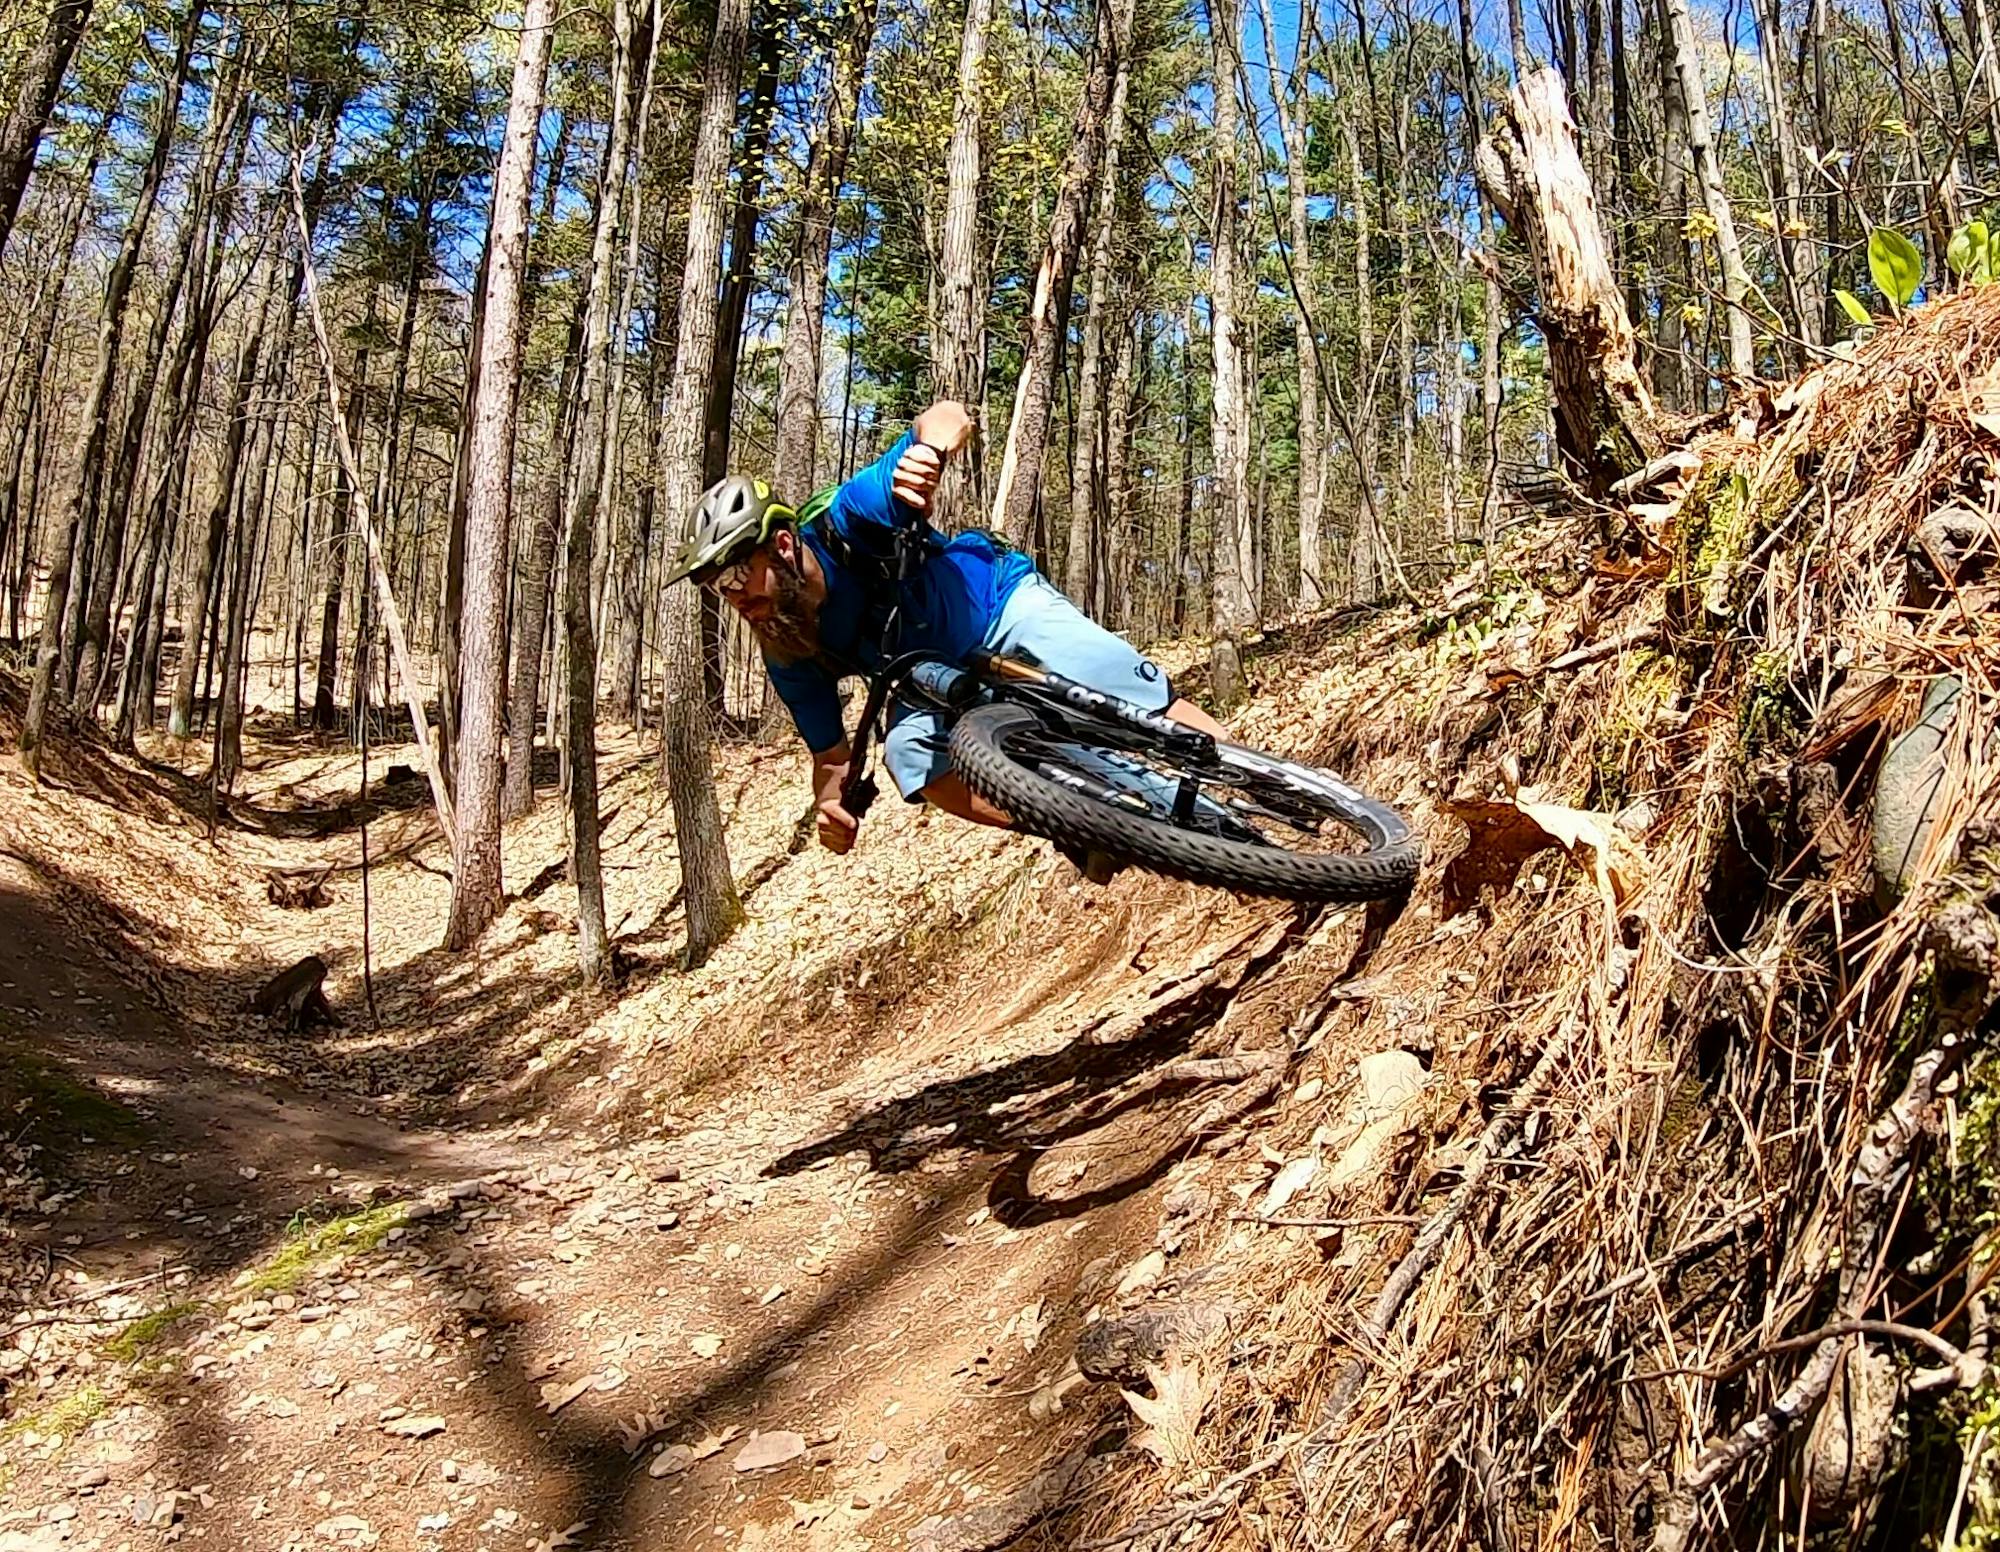 Ripping down Gravity Cavity. Rider: Greg Heil